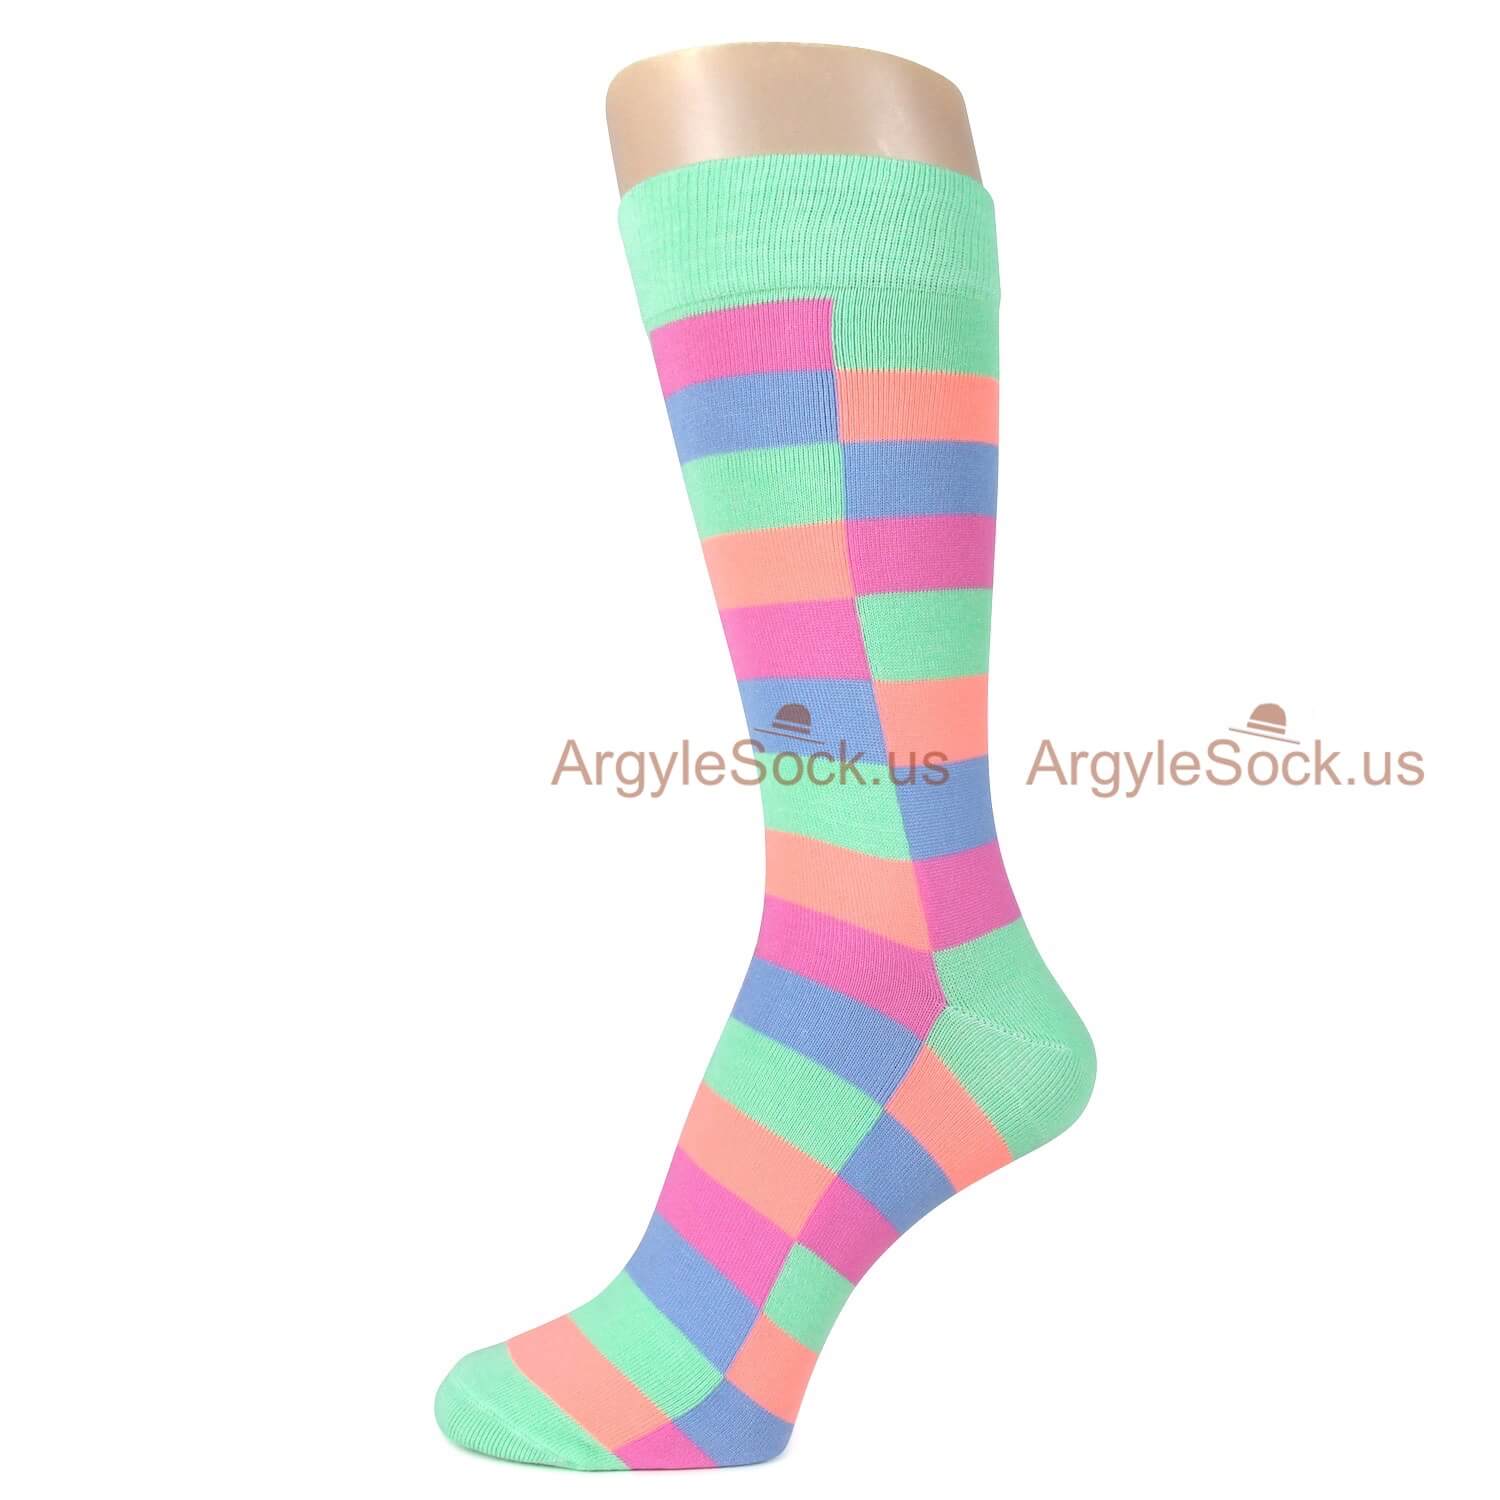 Iconic Multiple Colored Patterned Socks For Men